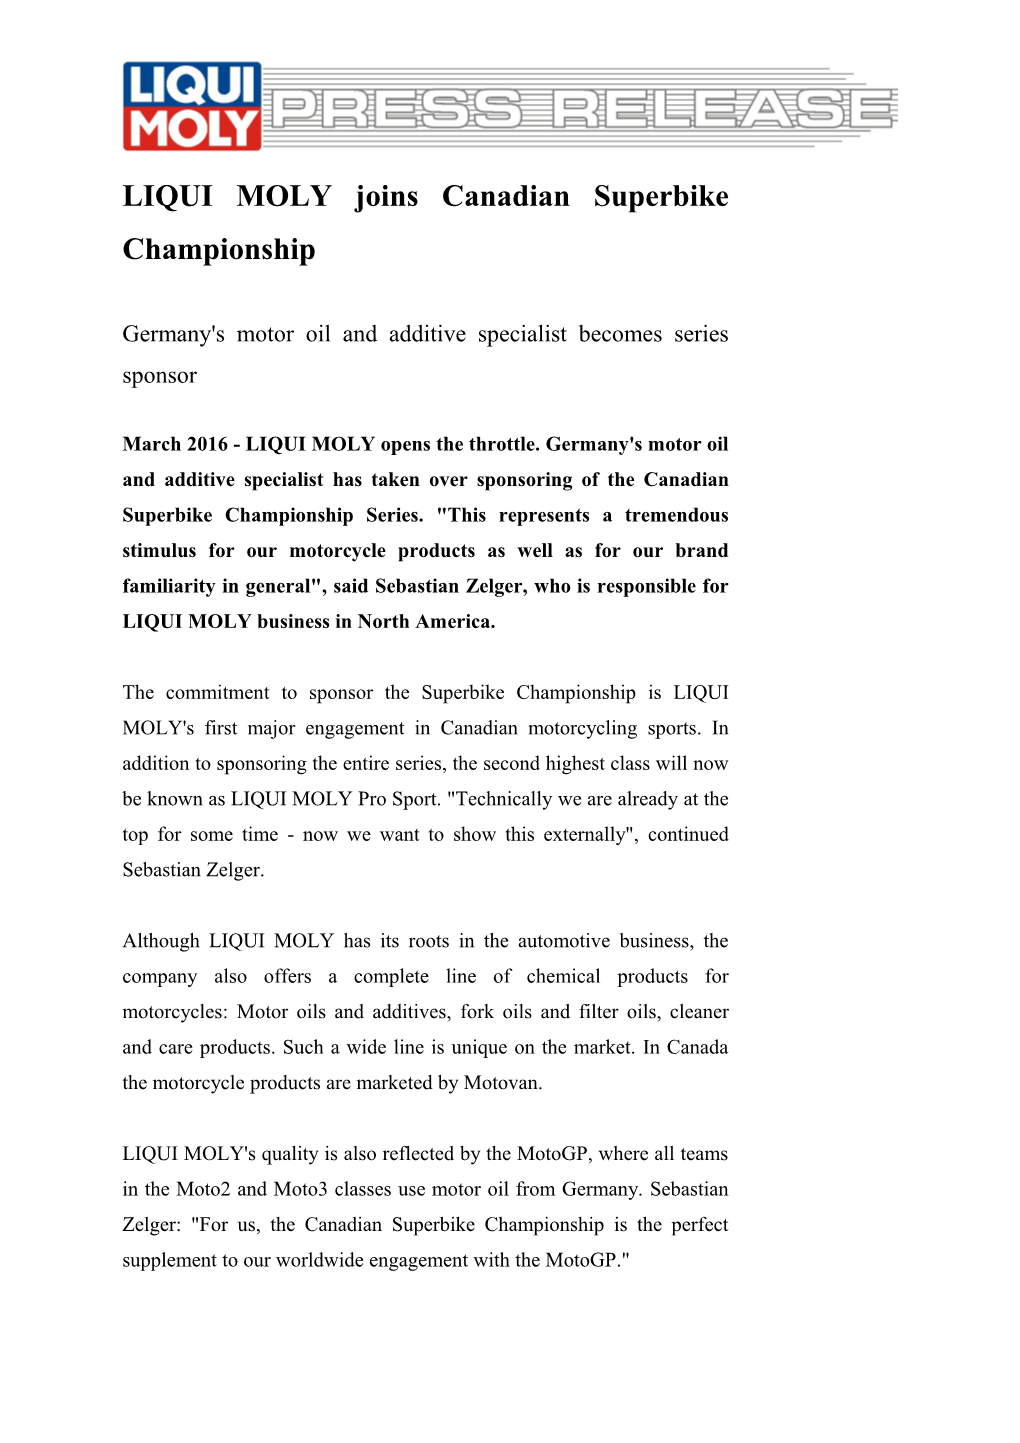 LIQUI MOLY Joins Canadian Superbike Championship